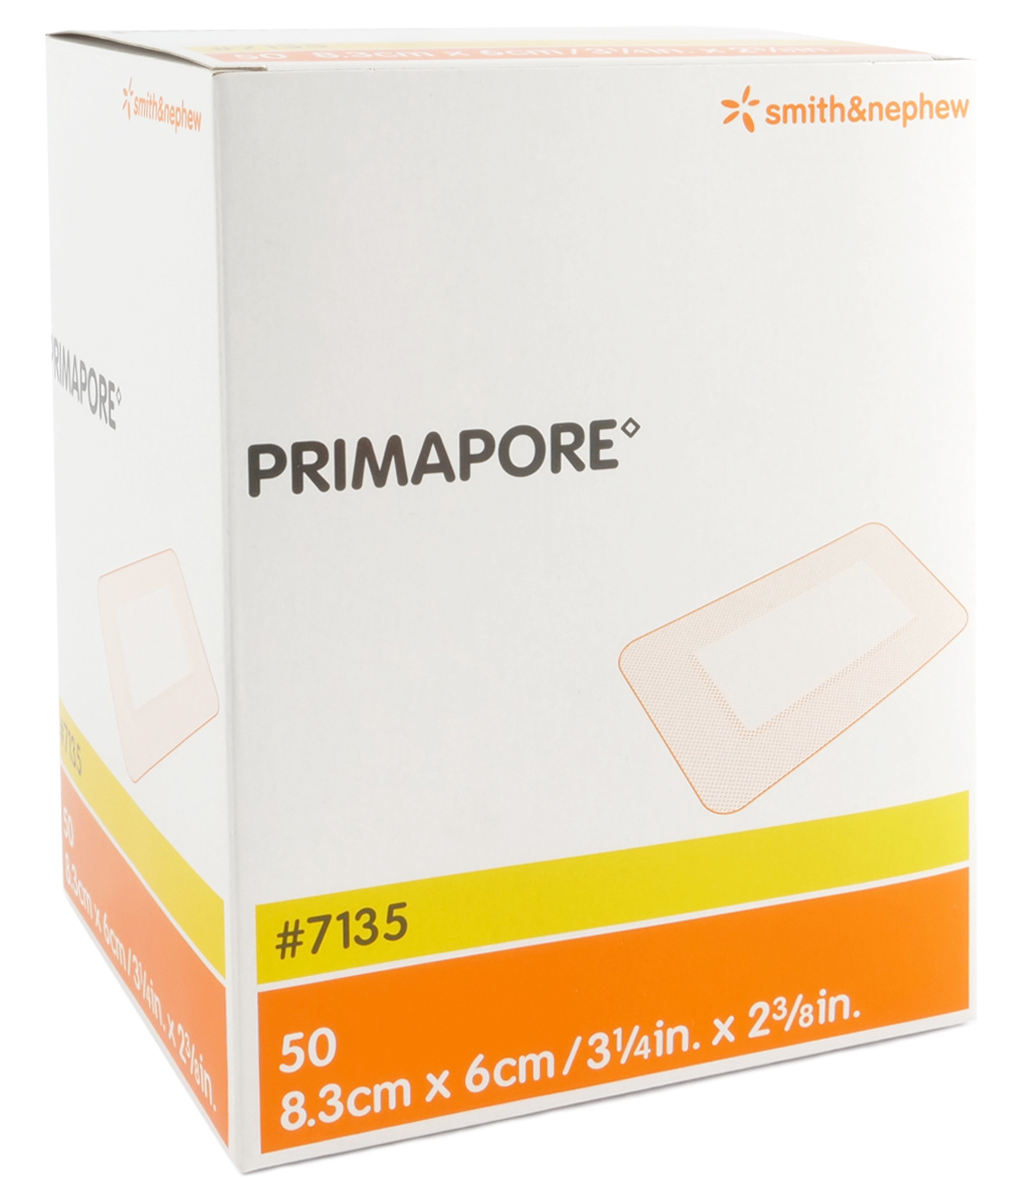 Primapore Wound Dressing 8.3cm x 6cm image 0